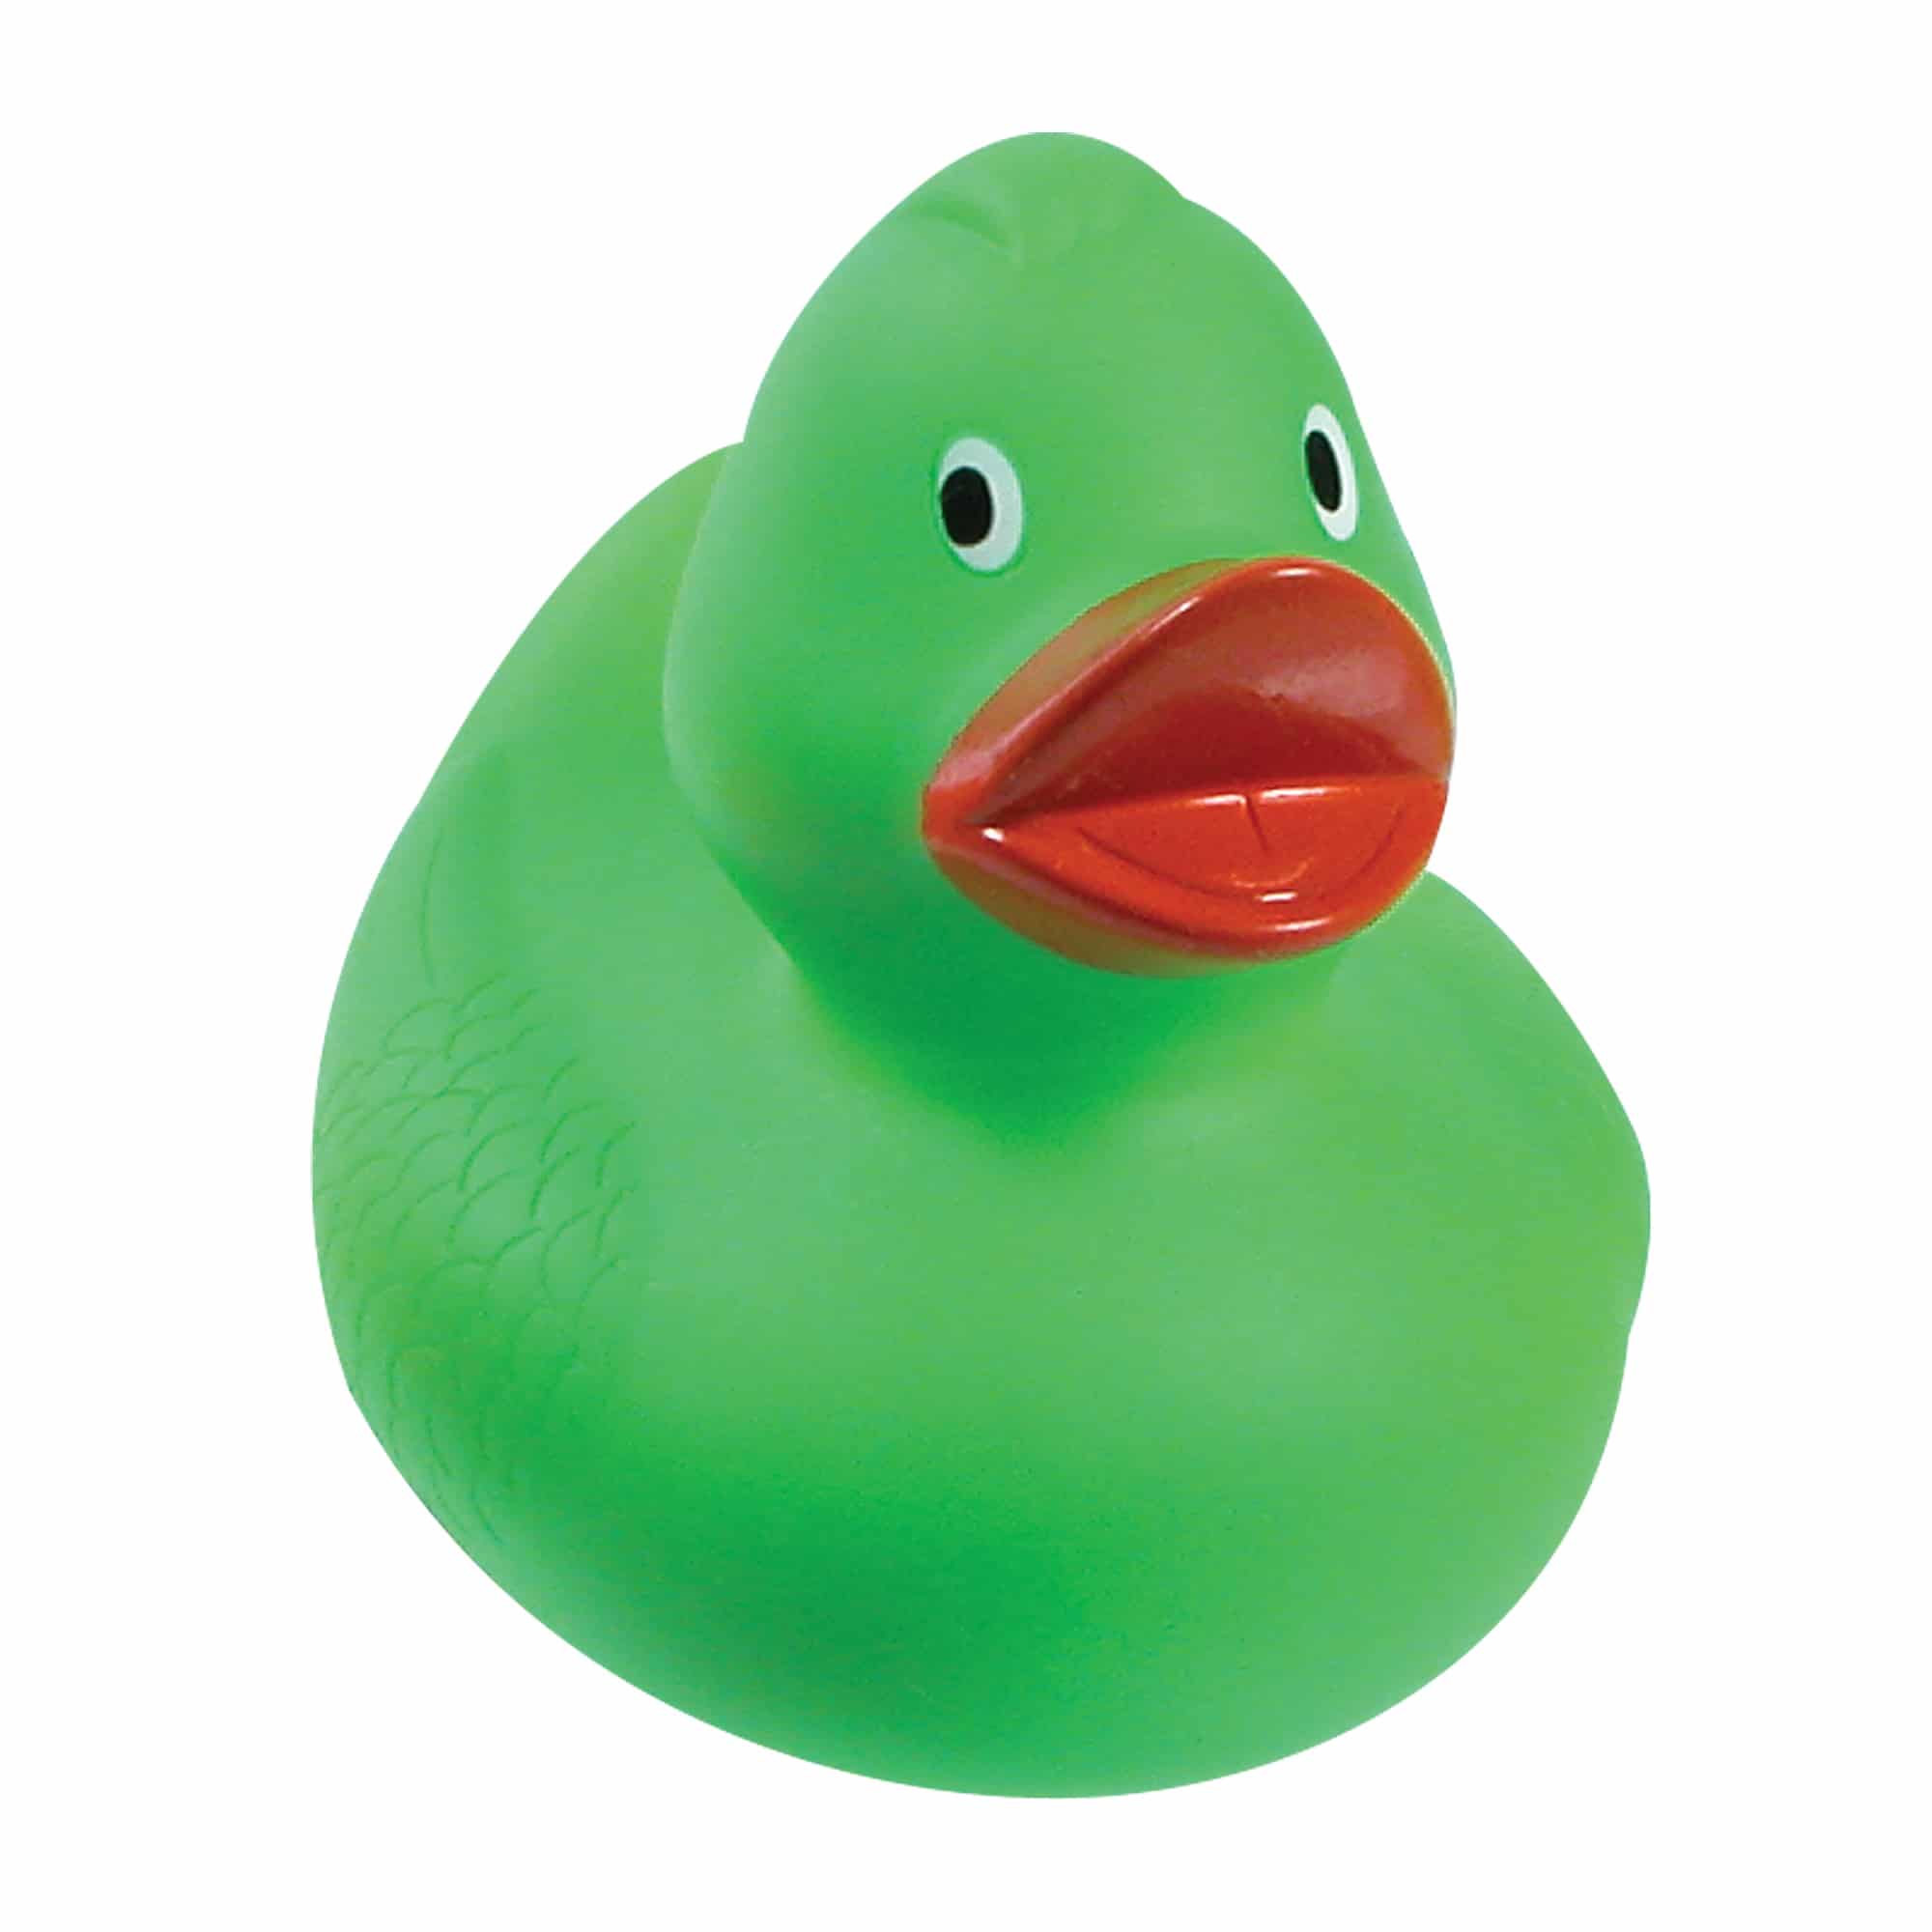 Rubber Duck - Multi Colors    